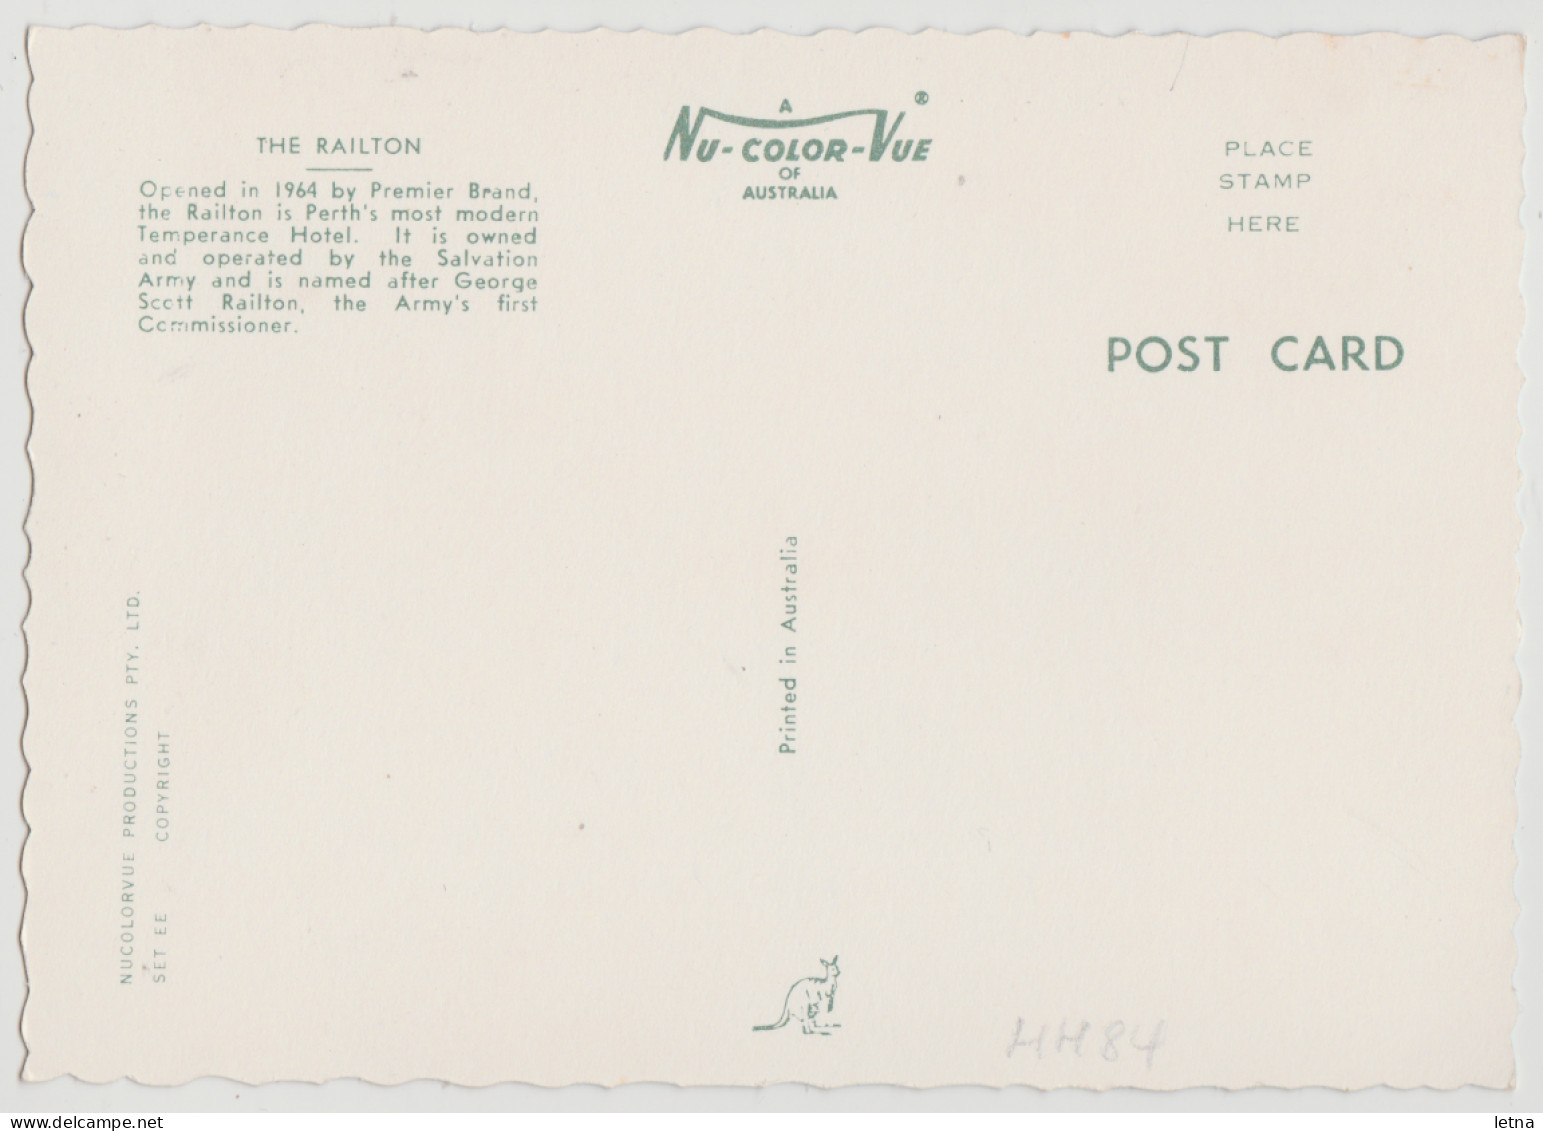 WESTERN AUSTRALIA WA Salvation Army Railton Hotel PERTH Nucolorvue Set EE Postcard C1960s - Perth